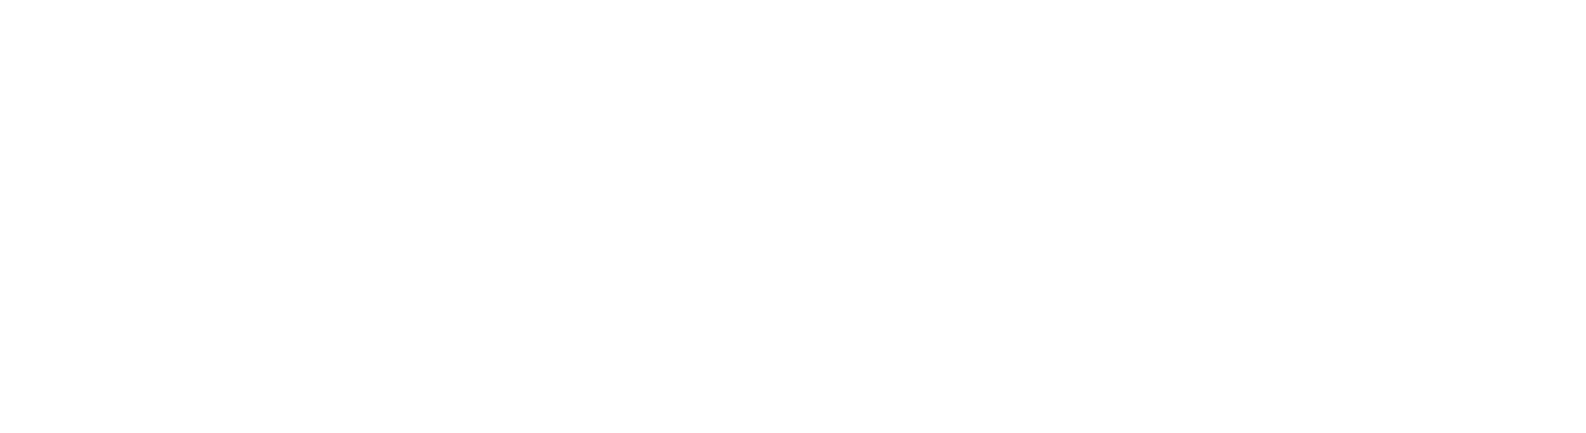 Eaton Logo groß für dunkle Hintergründe (transparentes PNG)